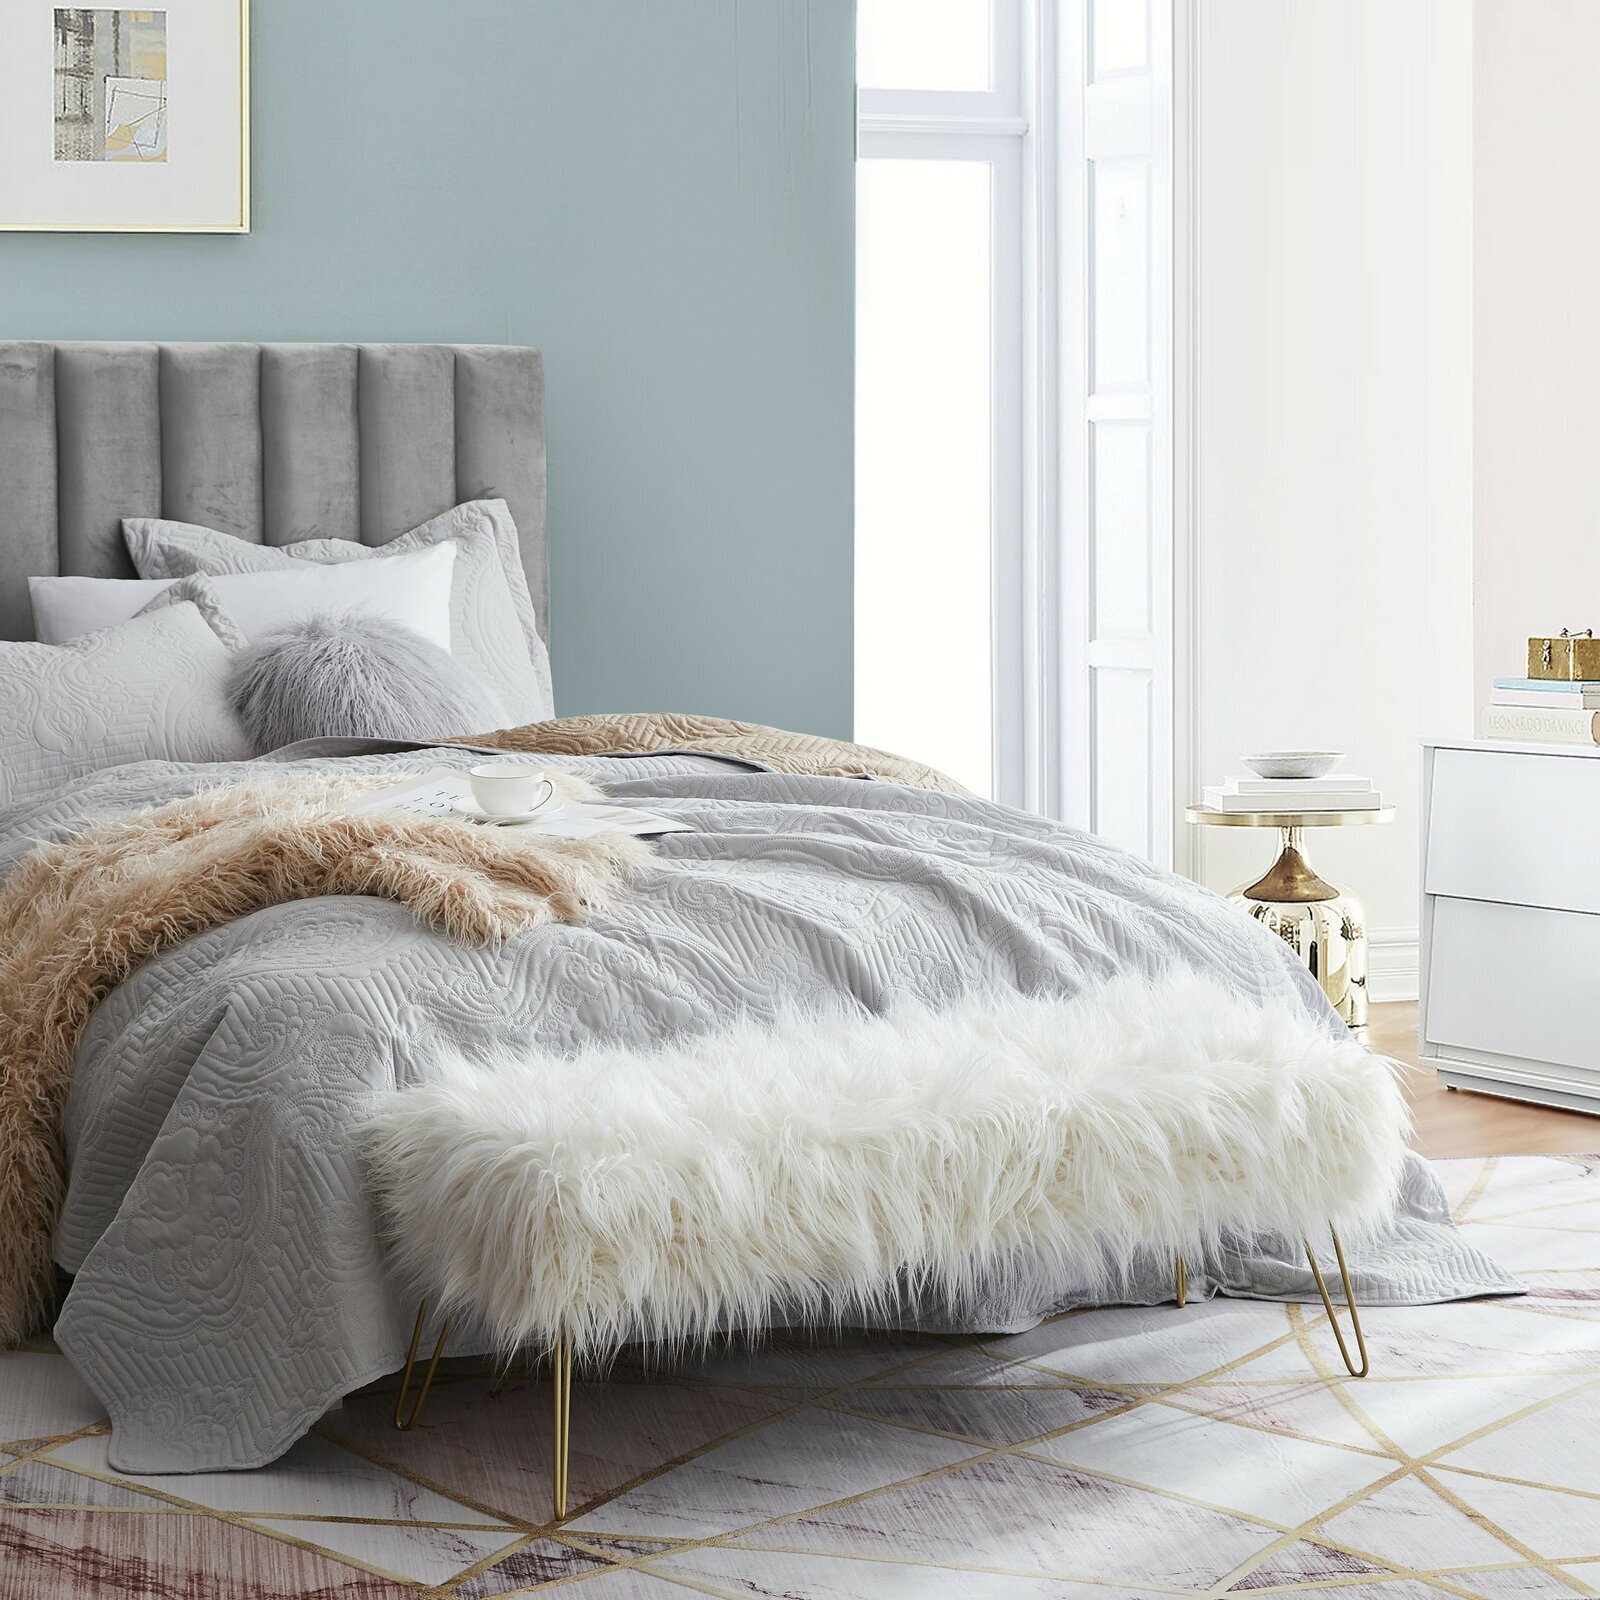 Fluffy bedroom ottoman